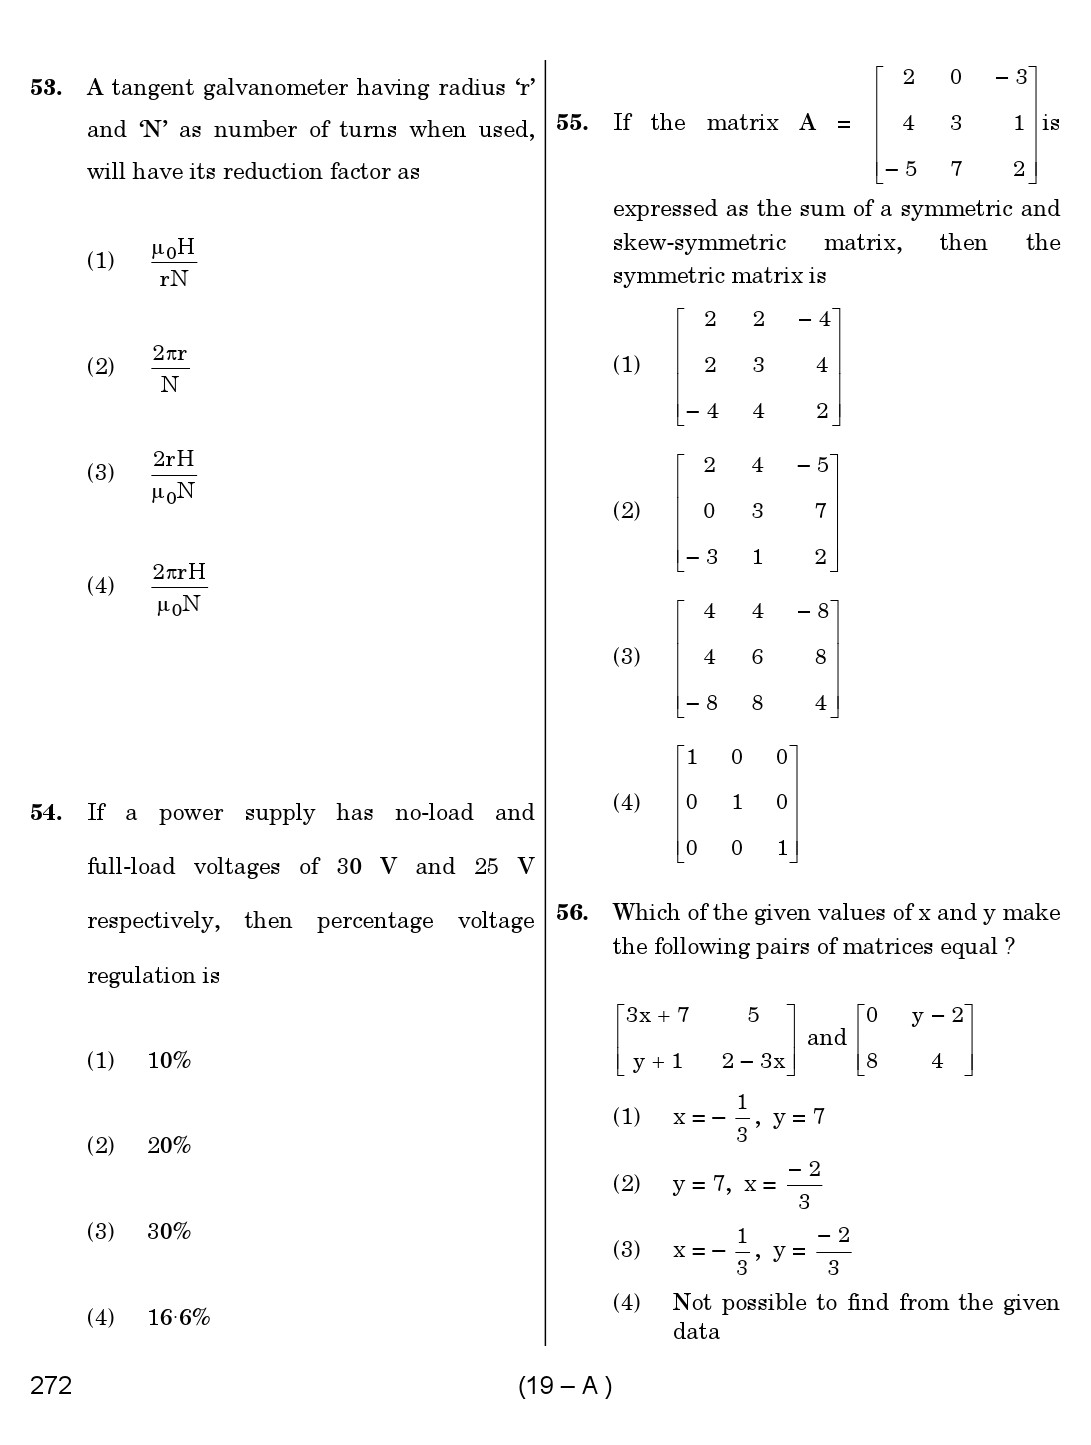 Karnataka PSC Mathematics Teacher Exam Sample Question Paper Subject code 272 19